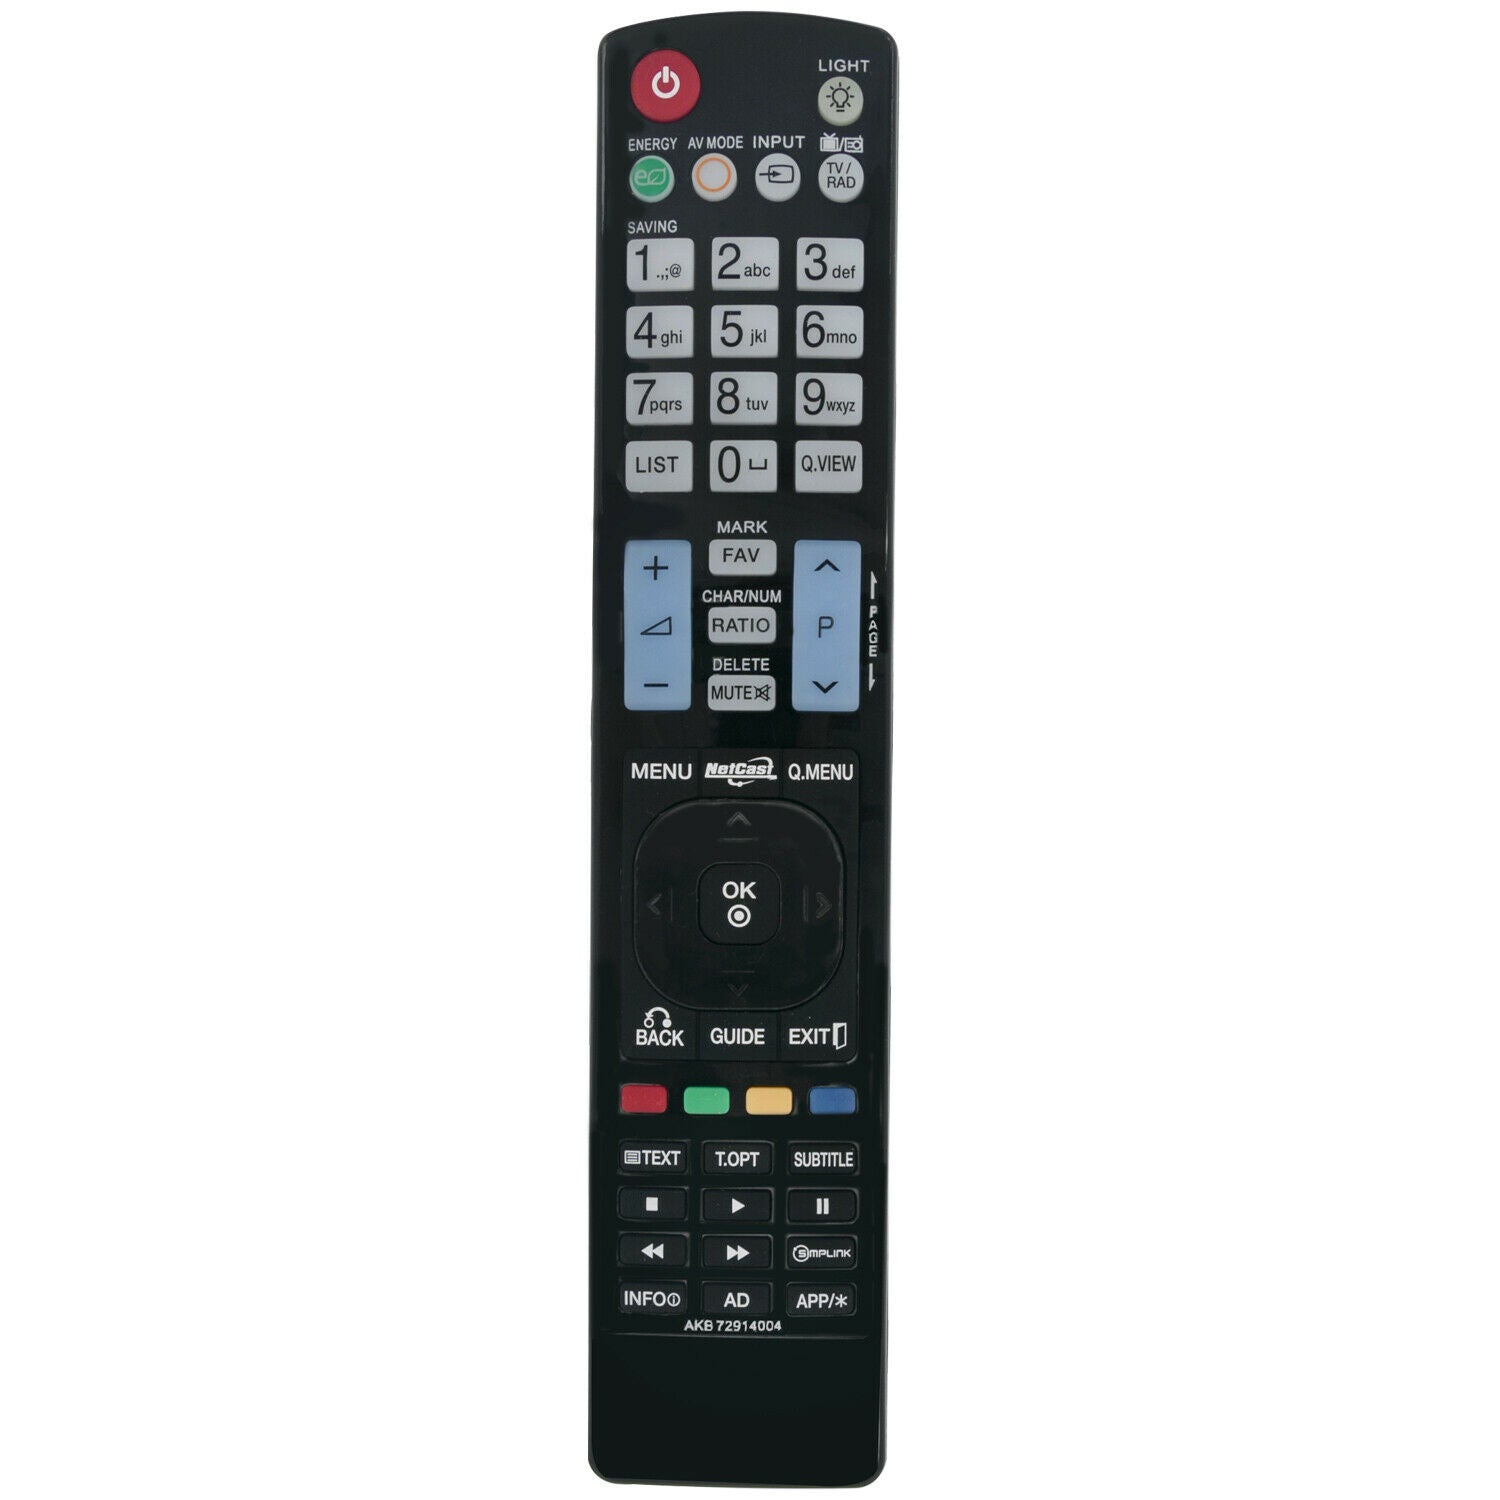 AKB72914004 TV Replacement Remote Control for LG 32LE7500 32le5 37le5 42le5 37ld6 32ld6